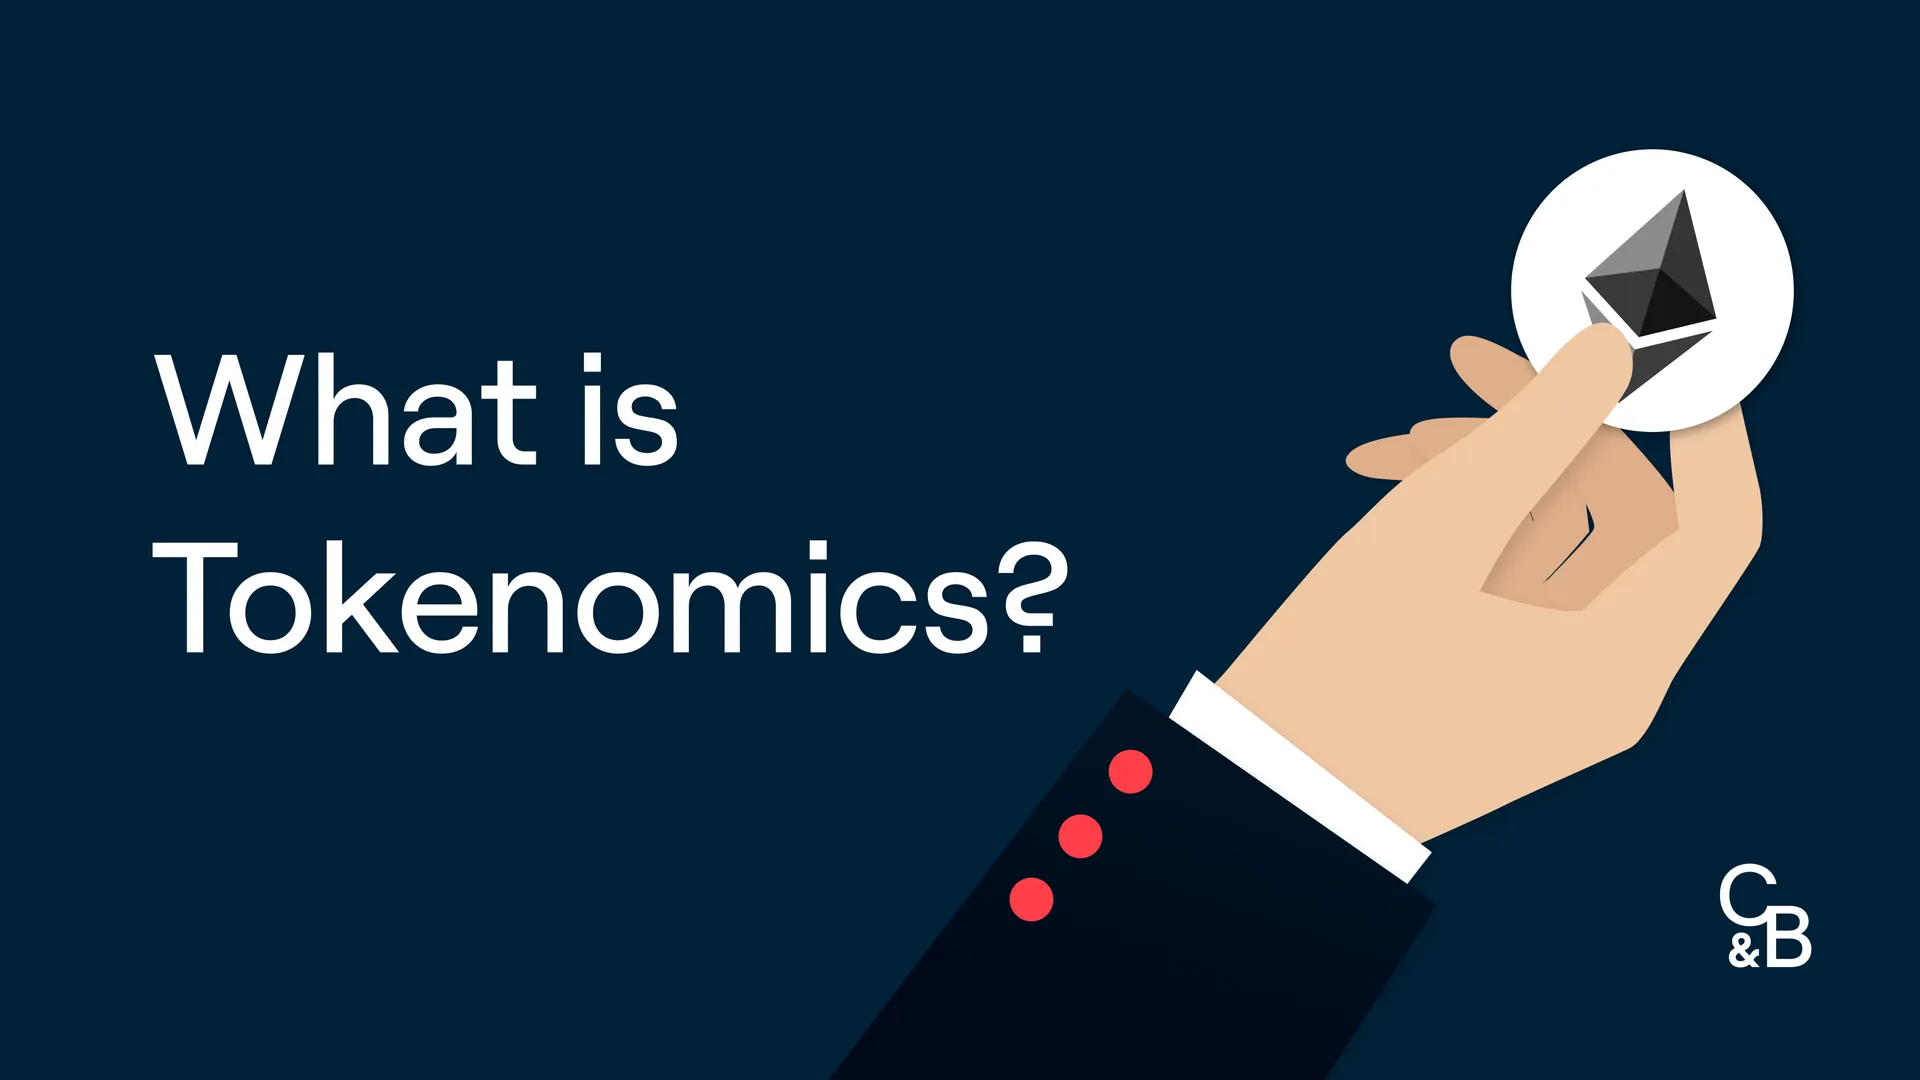 What Is tokenomics?